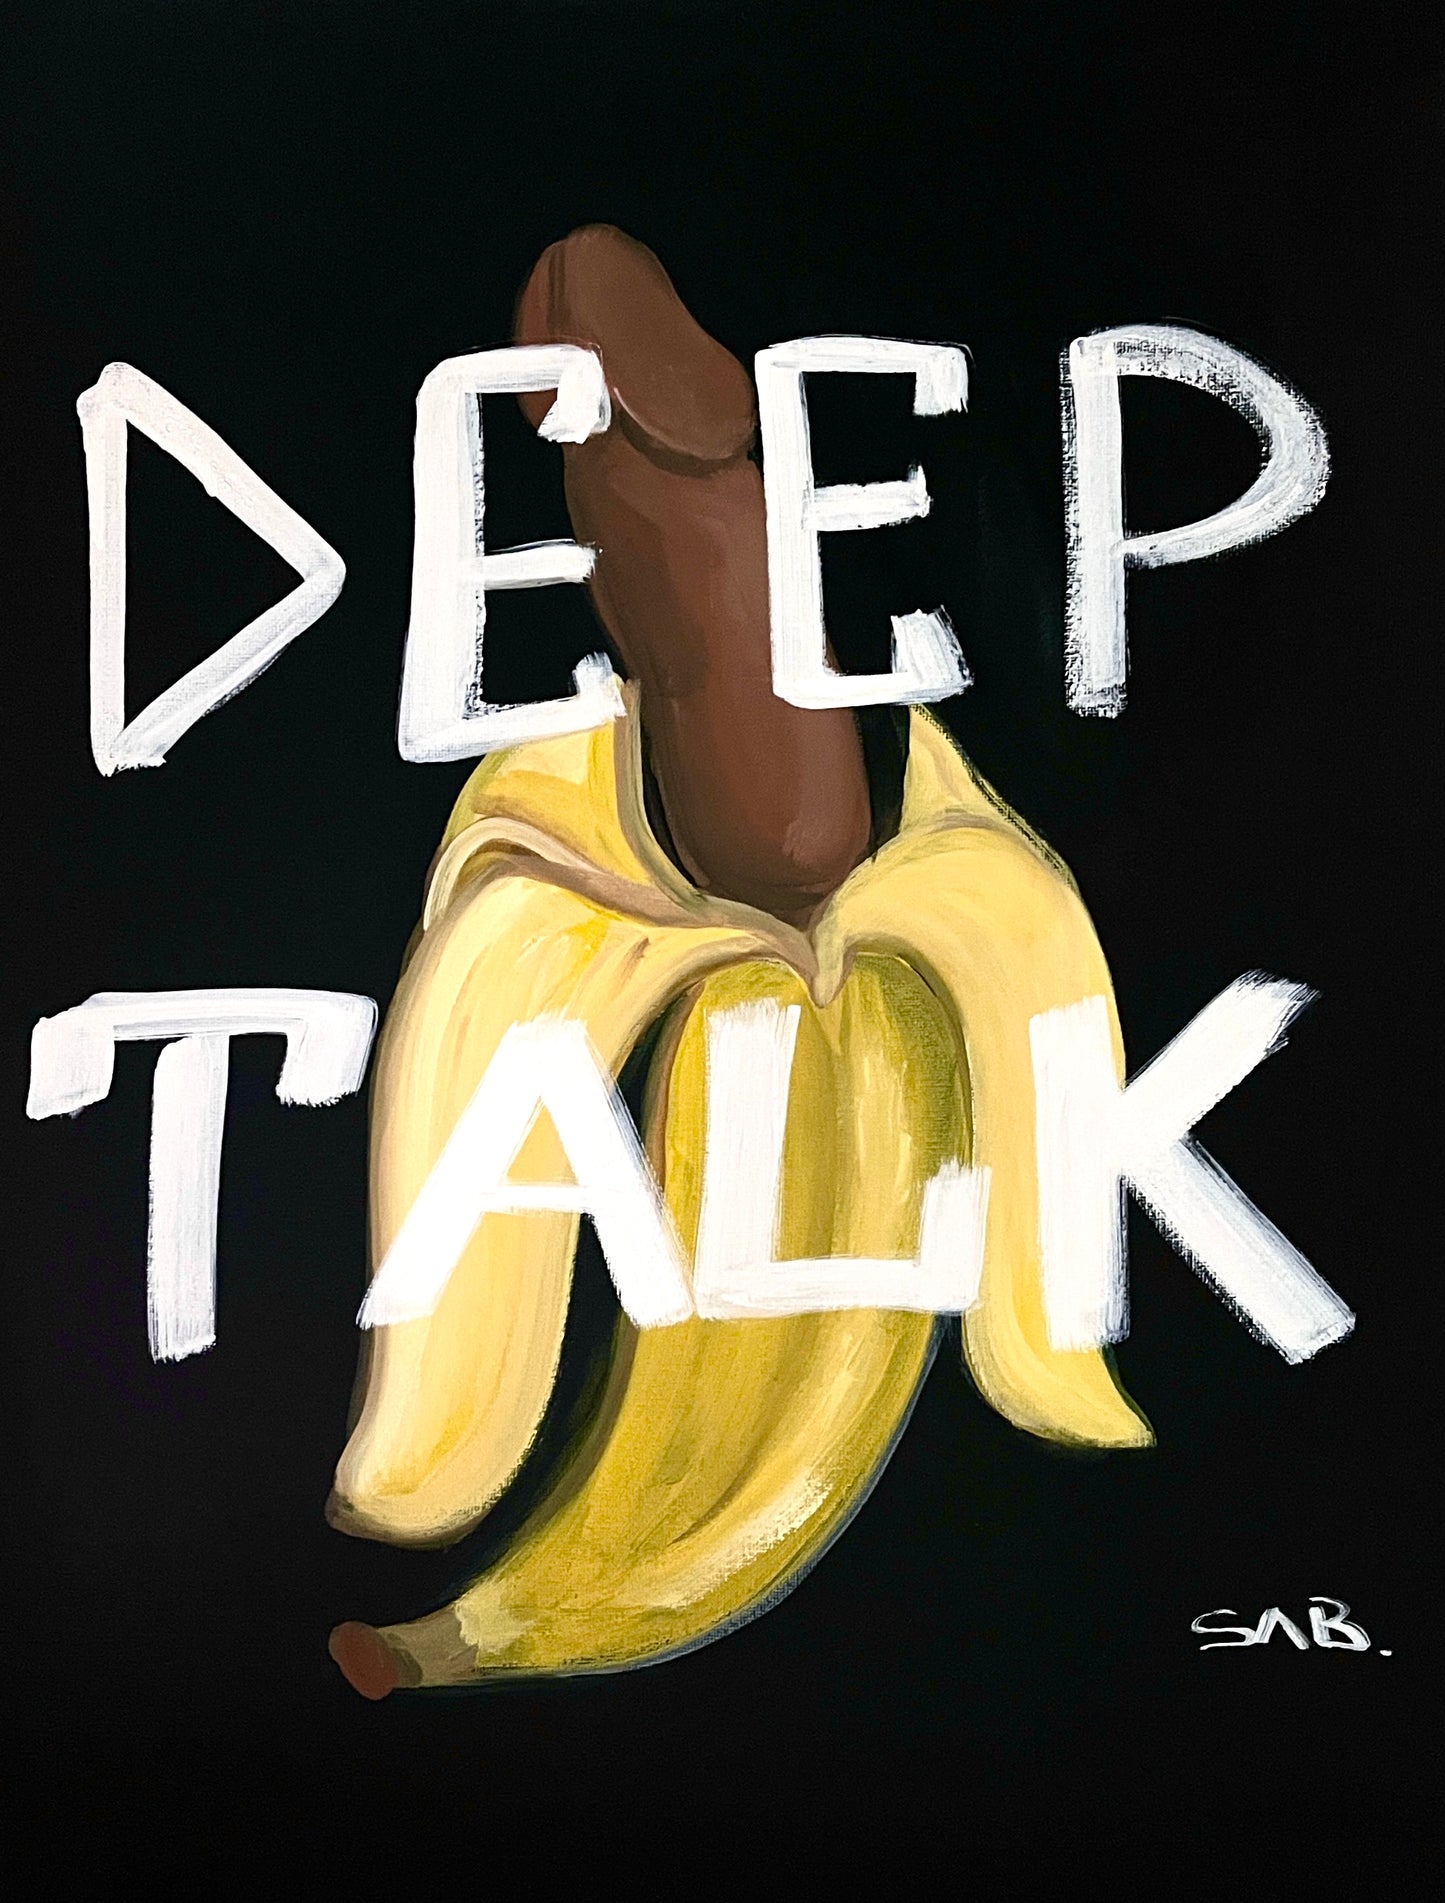 Deep Talk fun gay art print